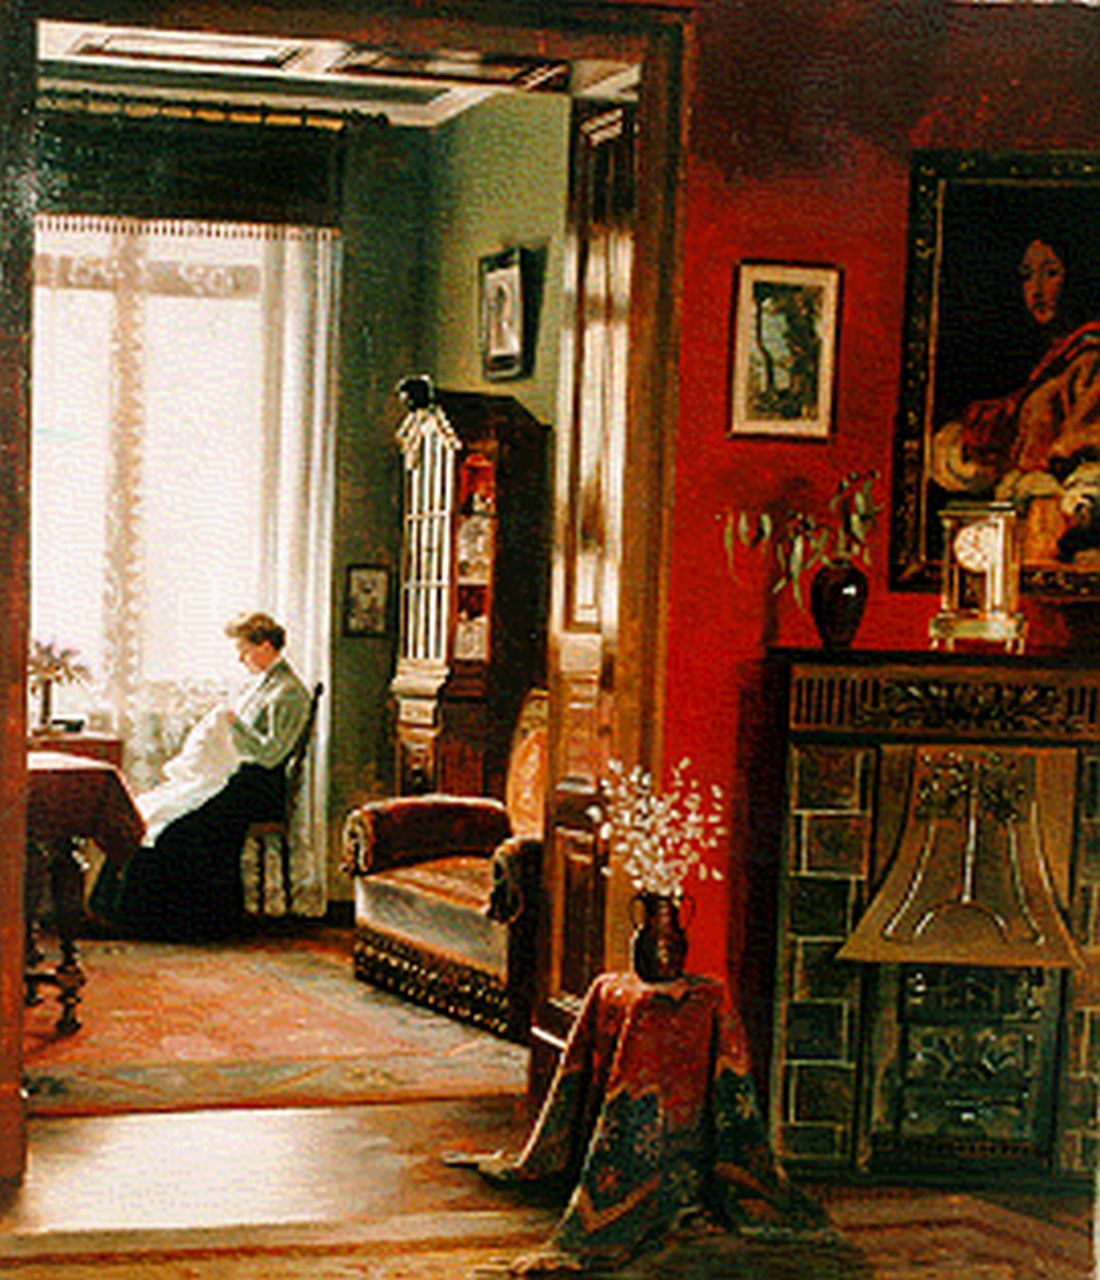 Murdfield C.  | Carl Murdfield, Bordurende vrouw in interieur, olieverf op doek 72,0 x 62,5 cm, gesigneerd rechtsonder